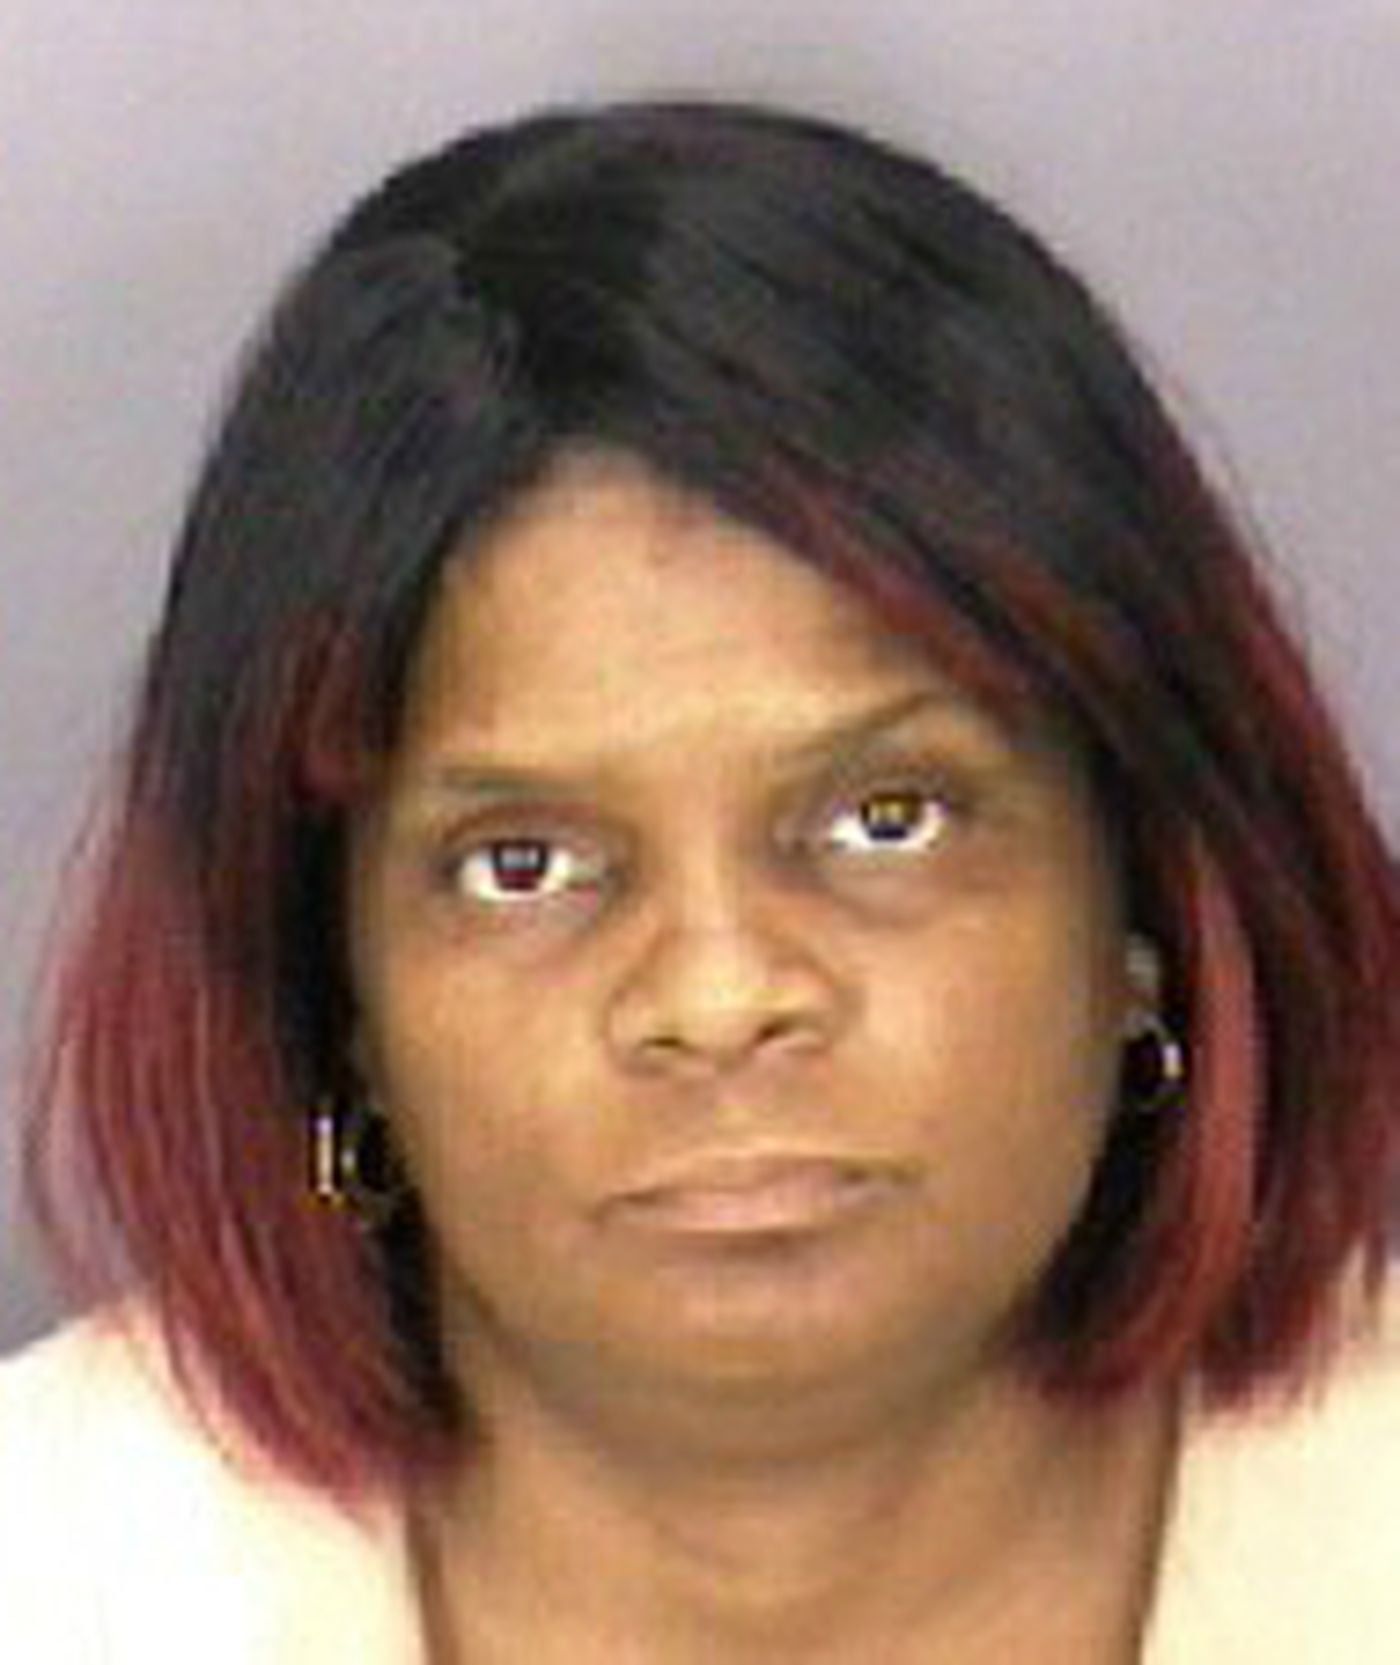 Gloria Byars in a police mug shot when she was arrested in Virginia in 2003.